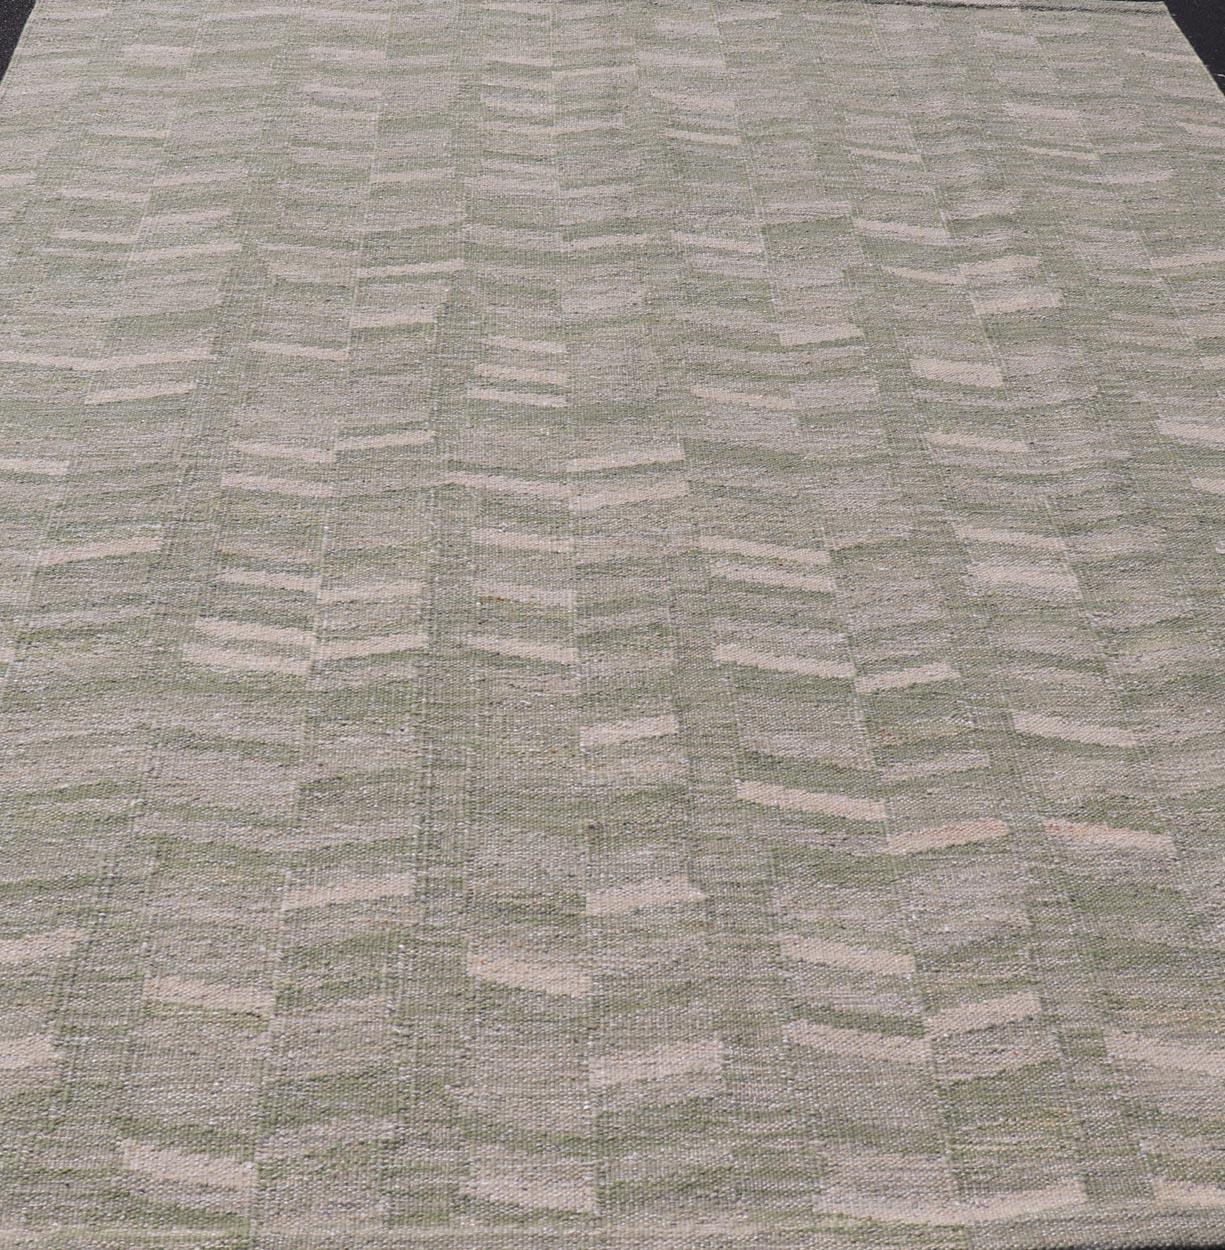 Modern Scandinavian/Swedish Flat Weave Geometric Design Rug in Green Tones. Keivan Woven Arts Teppich, RJK-27959, Herkunftsland / Typ: Skandinavisch / Scandinavian Modern Flachgewebe.
Maße: 9'2 x 12'0 
Dieser skandinavische Teppich ist von den